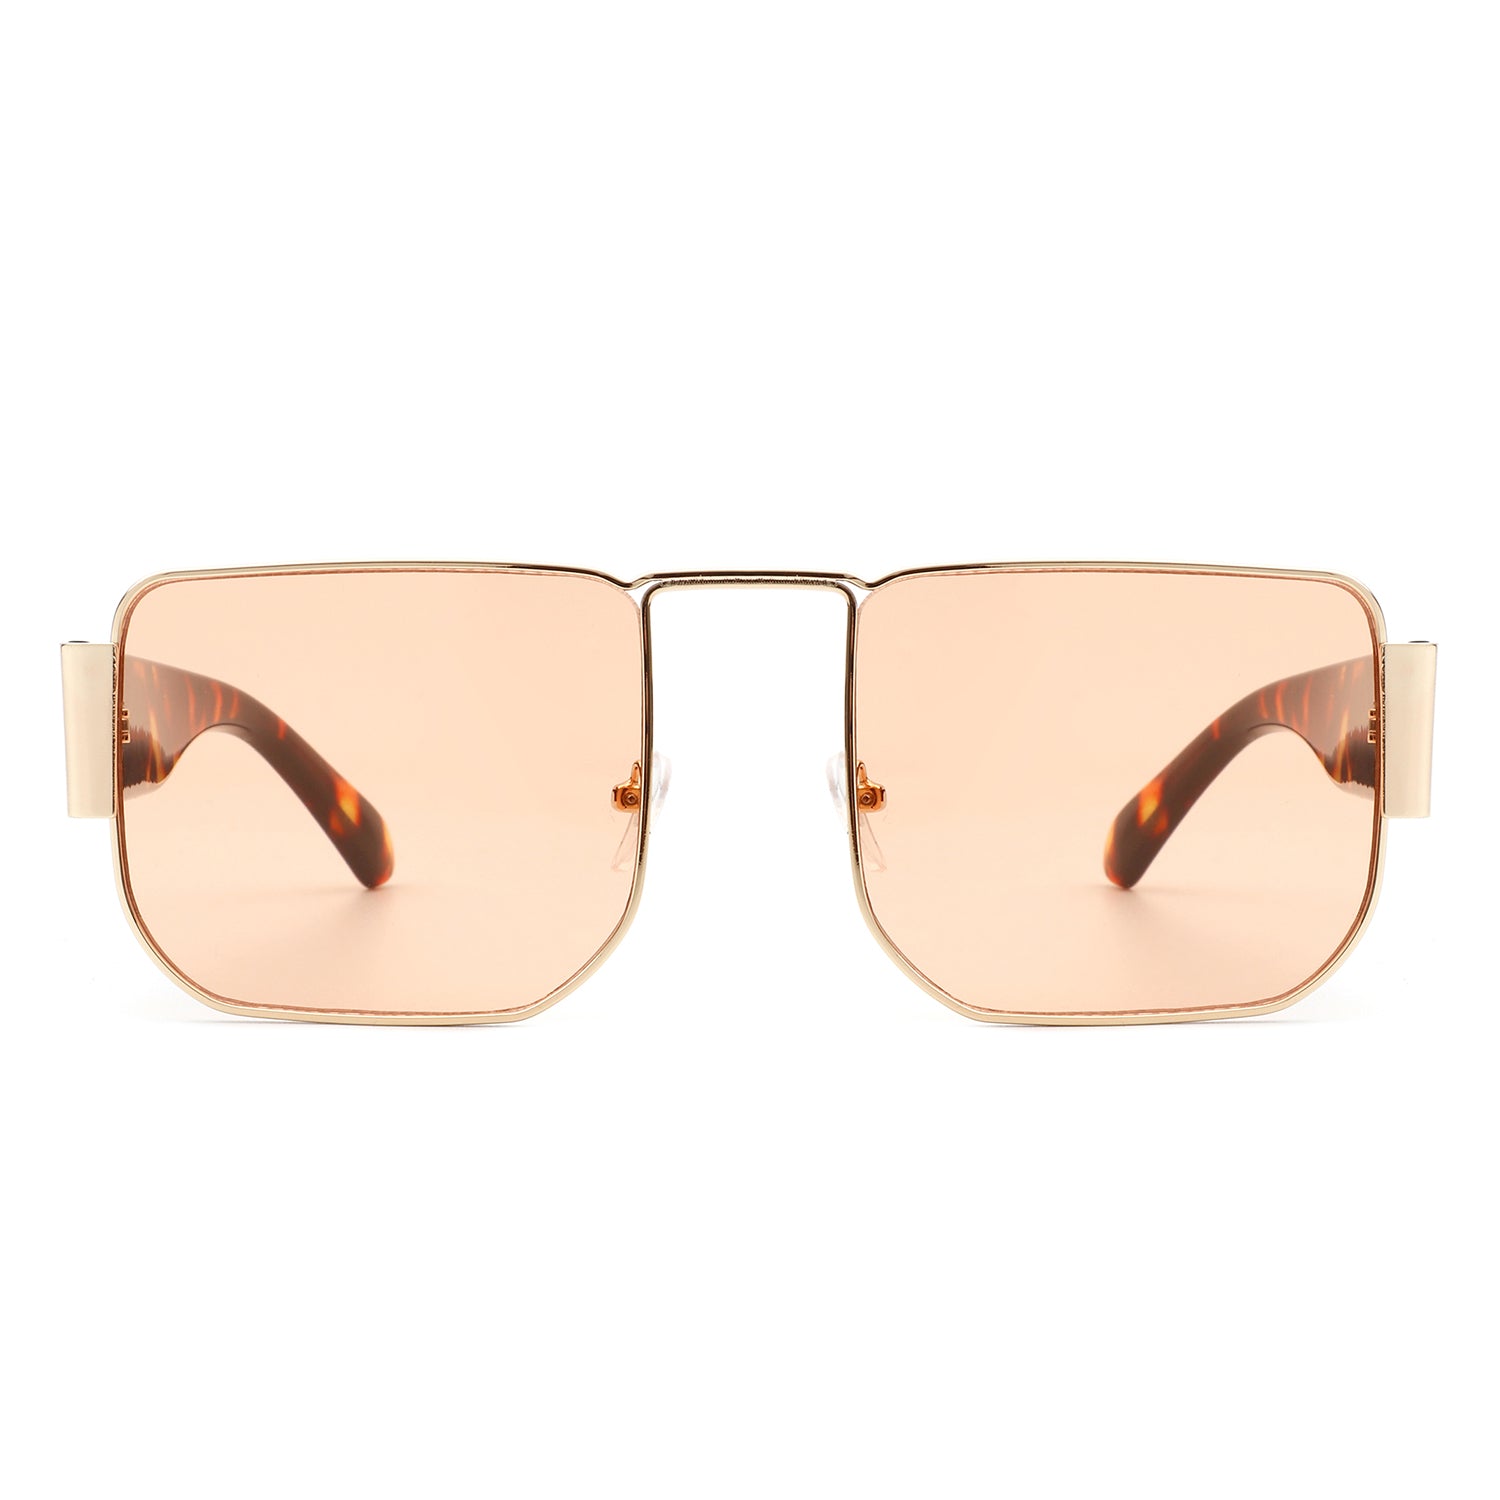 Diamonde - Square Retro Flat Top Tinted Vintage Fashion Sunglasses Brown